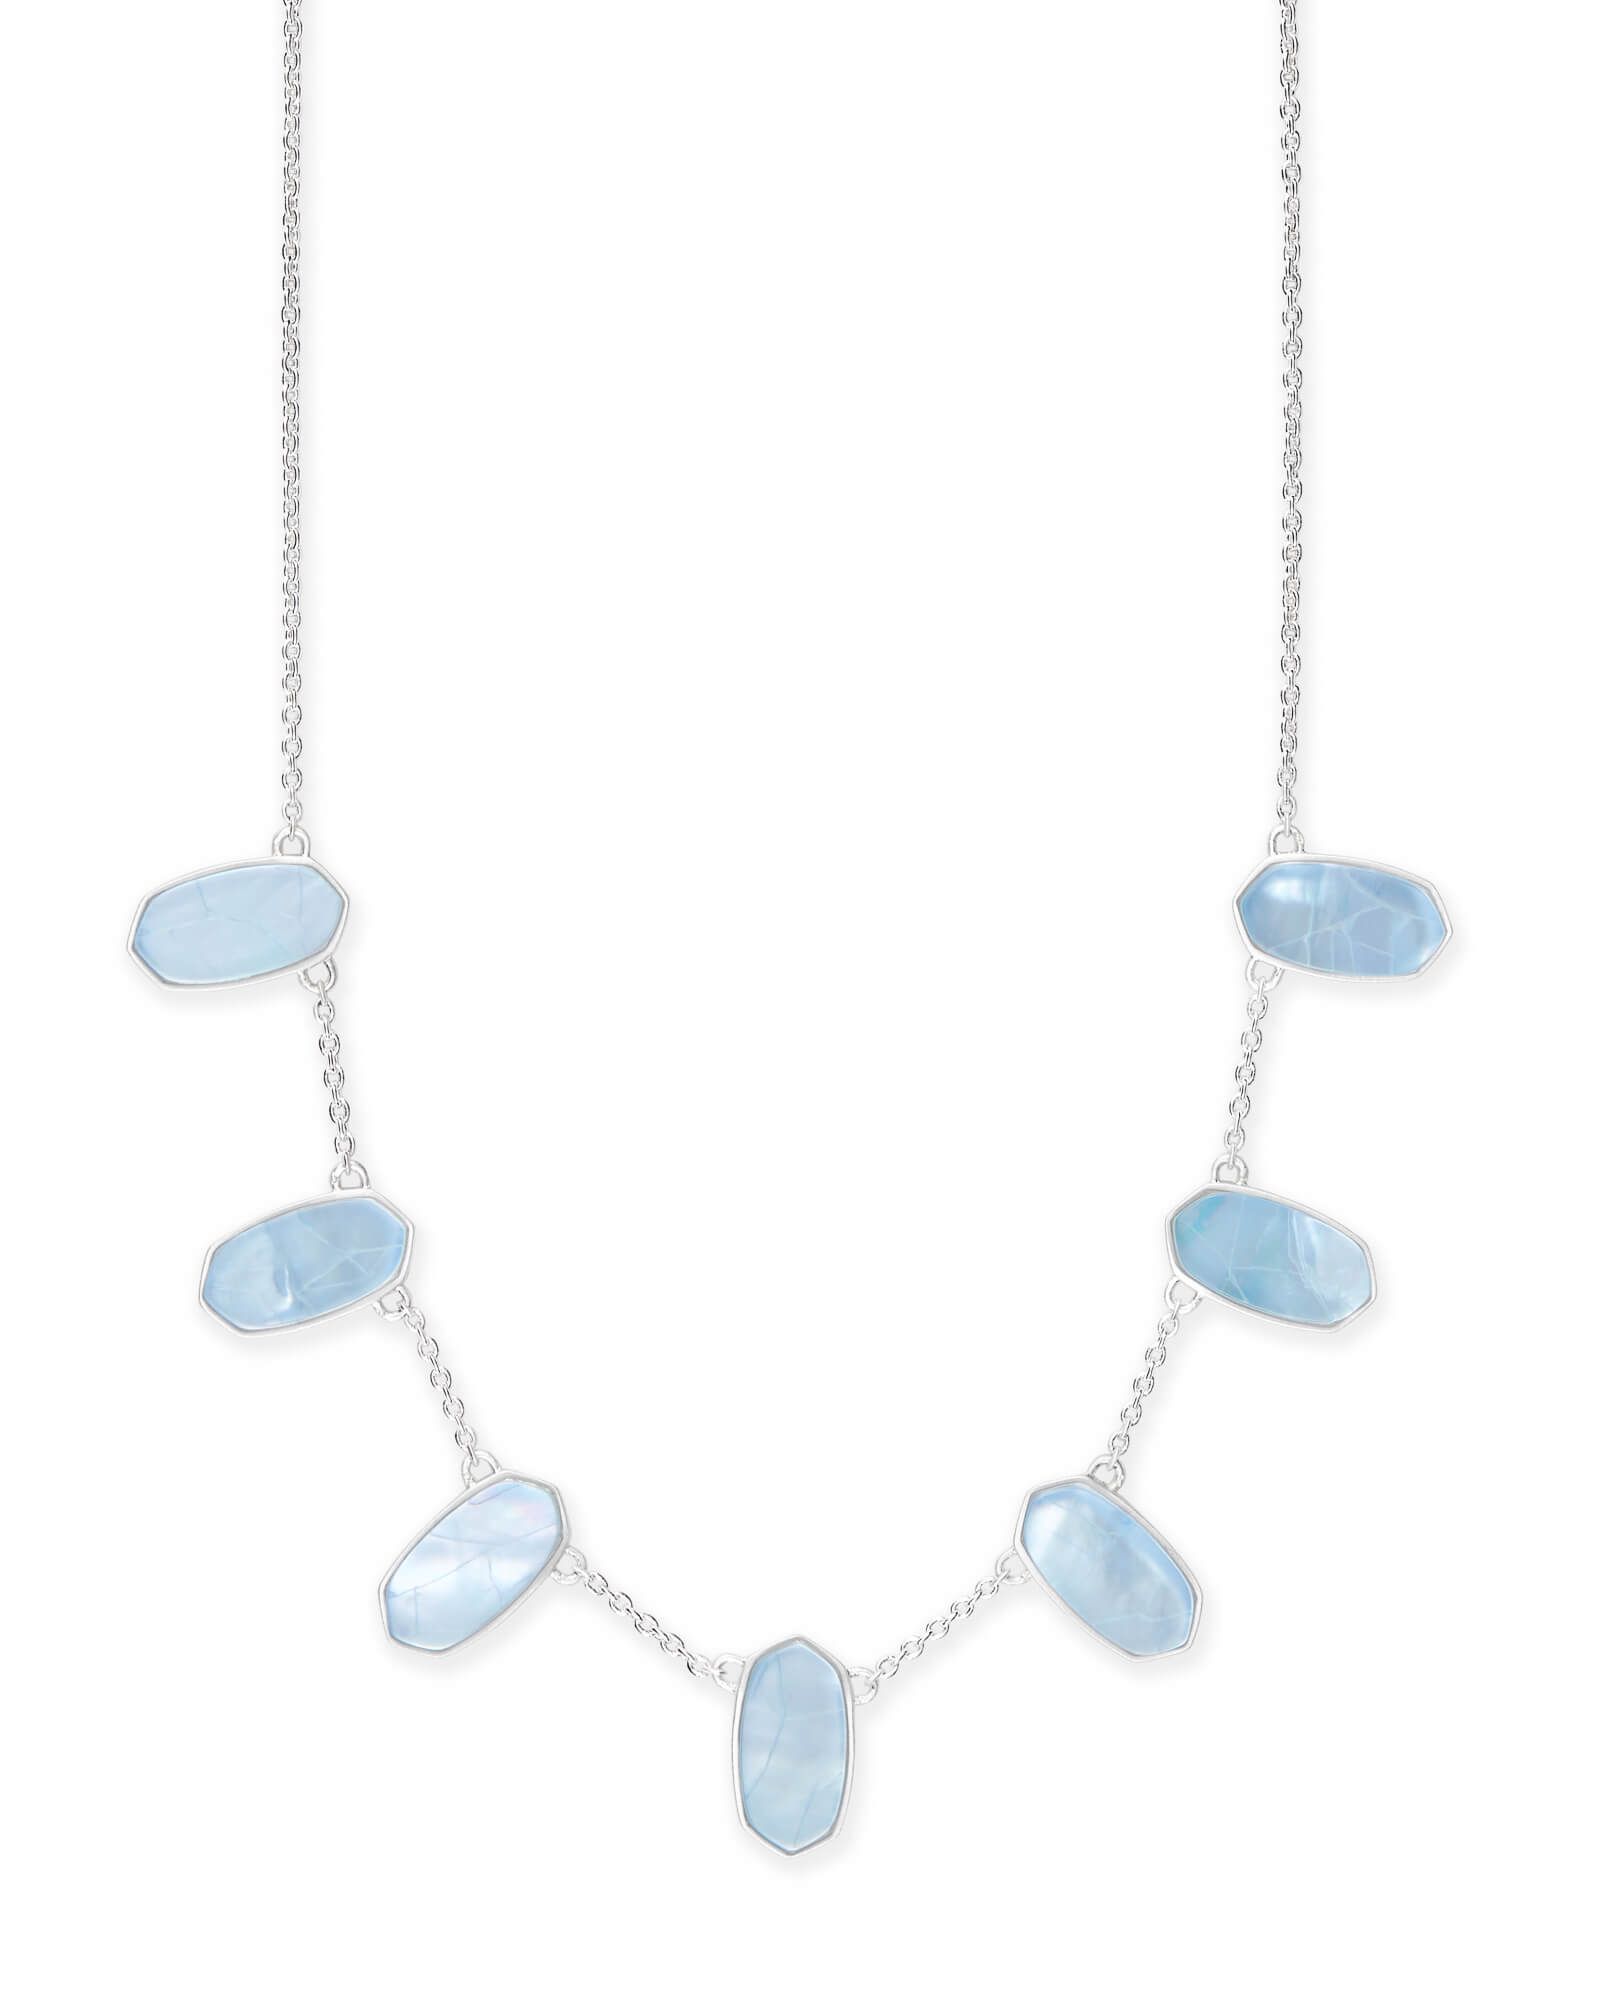 Meadow Bright Silver Collar Necklace in Sky Blue Illusion | Kendra Scott | Kendra Scott